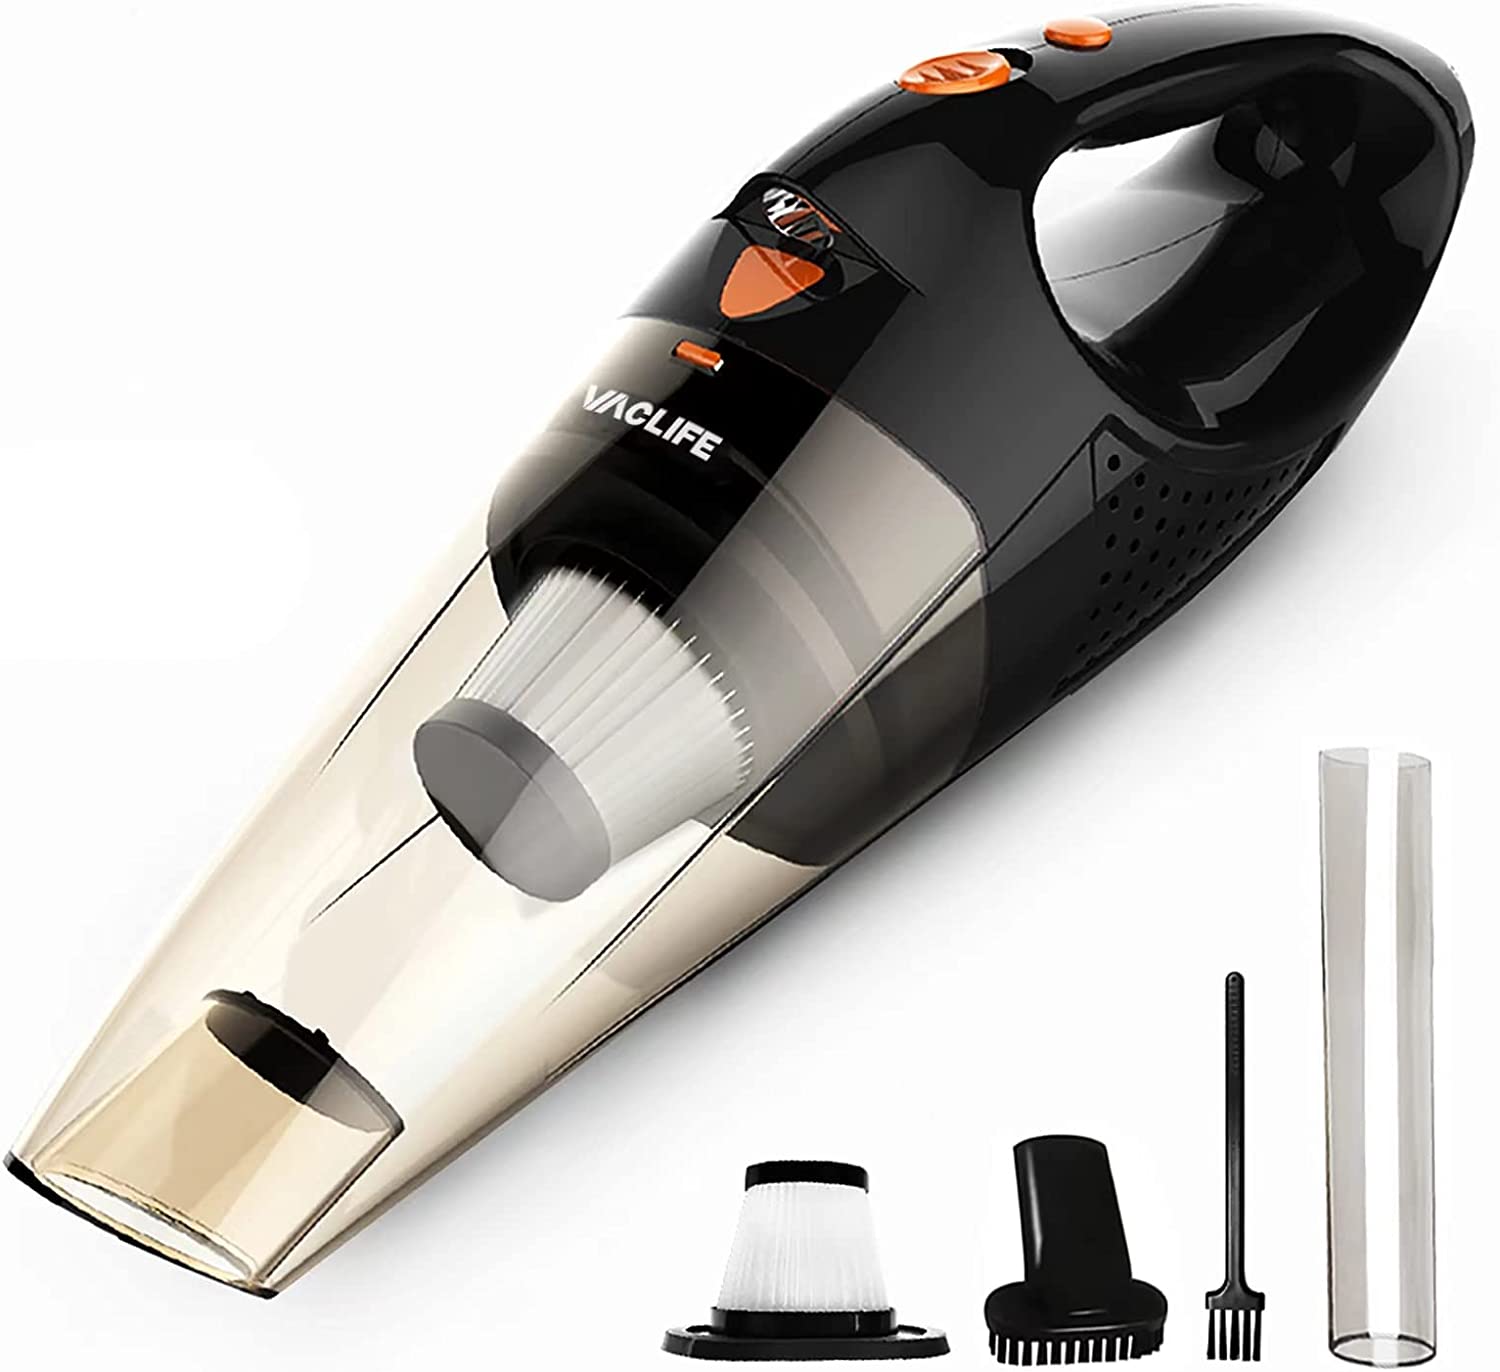 VacLife Handheld Vacuum, Car Vacuum Cleaner Cordless, Mini Portable Rechargeable Wireless Vacuum Cleaner with 2 Filters, Orange (VL189) - ASIN: B08576D2RL